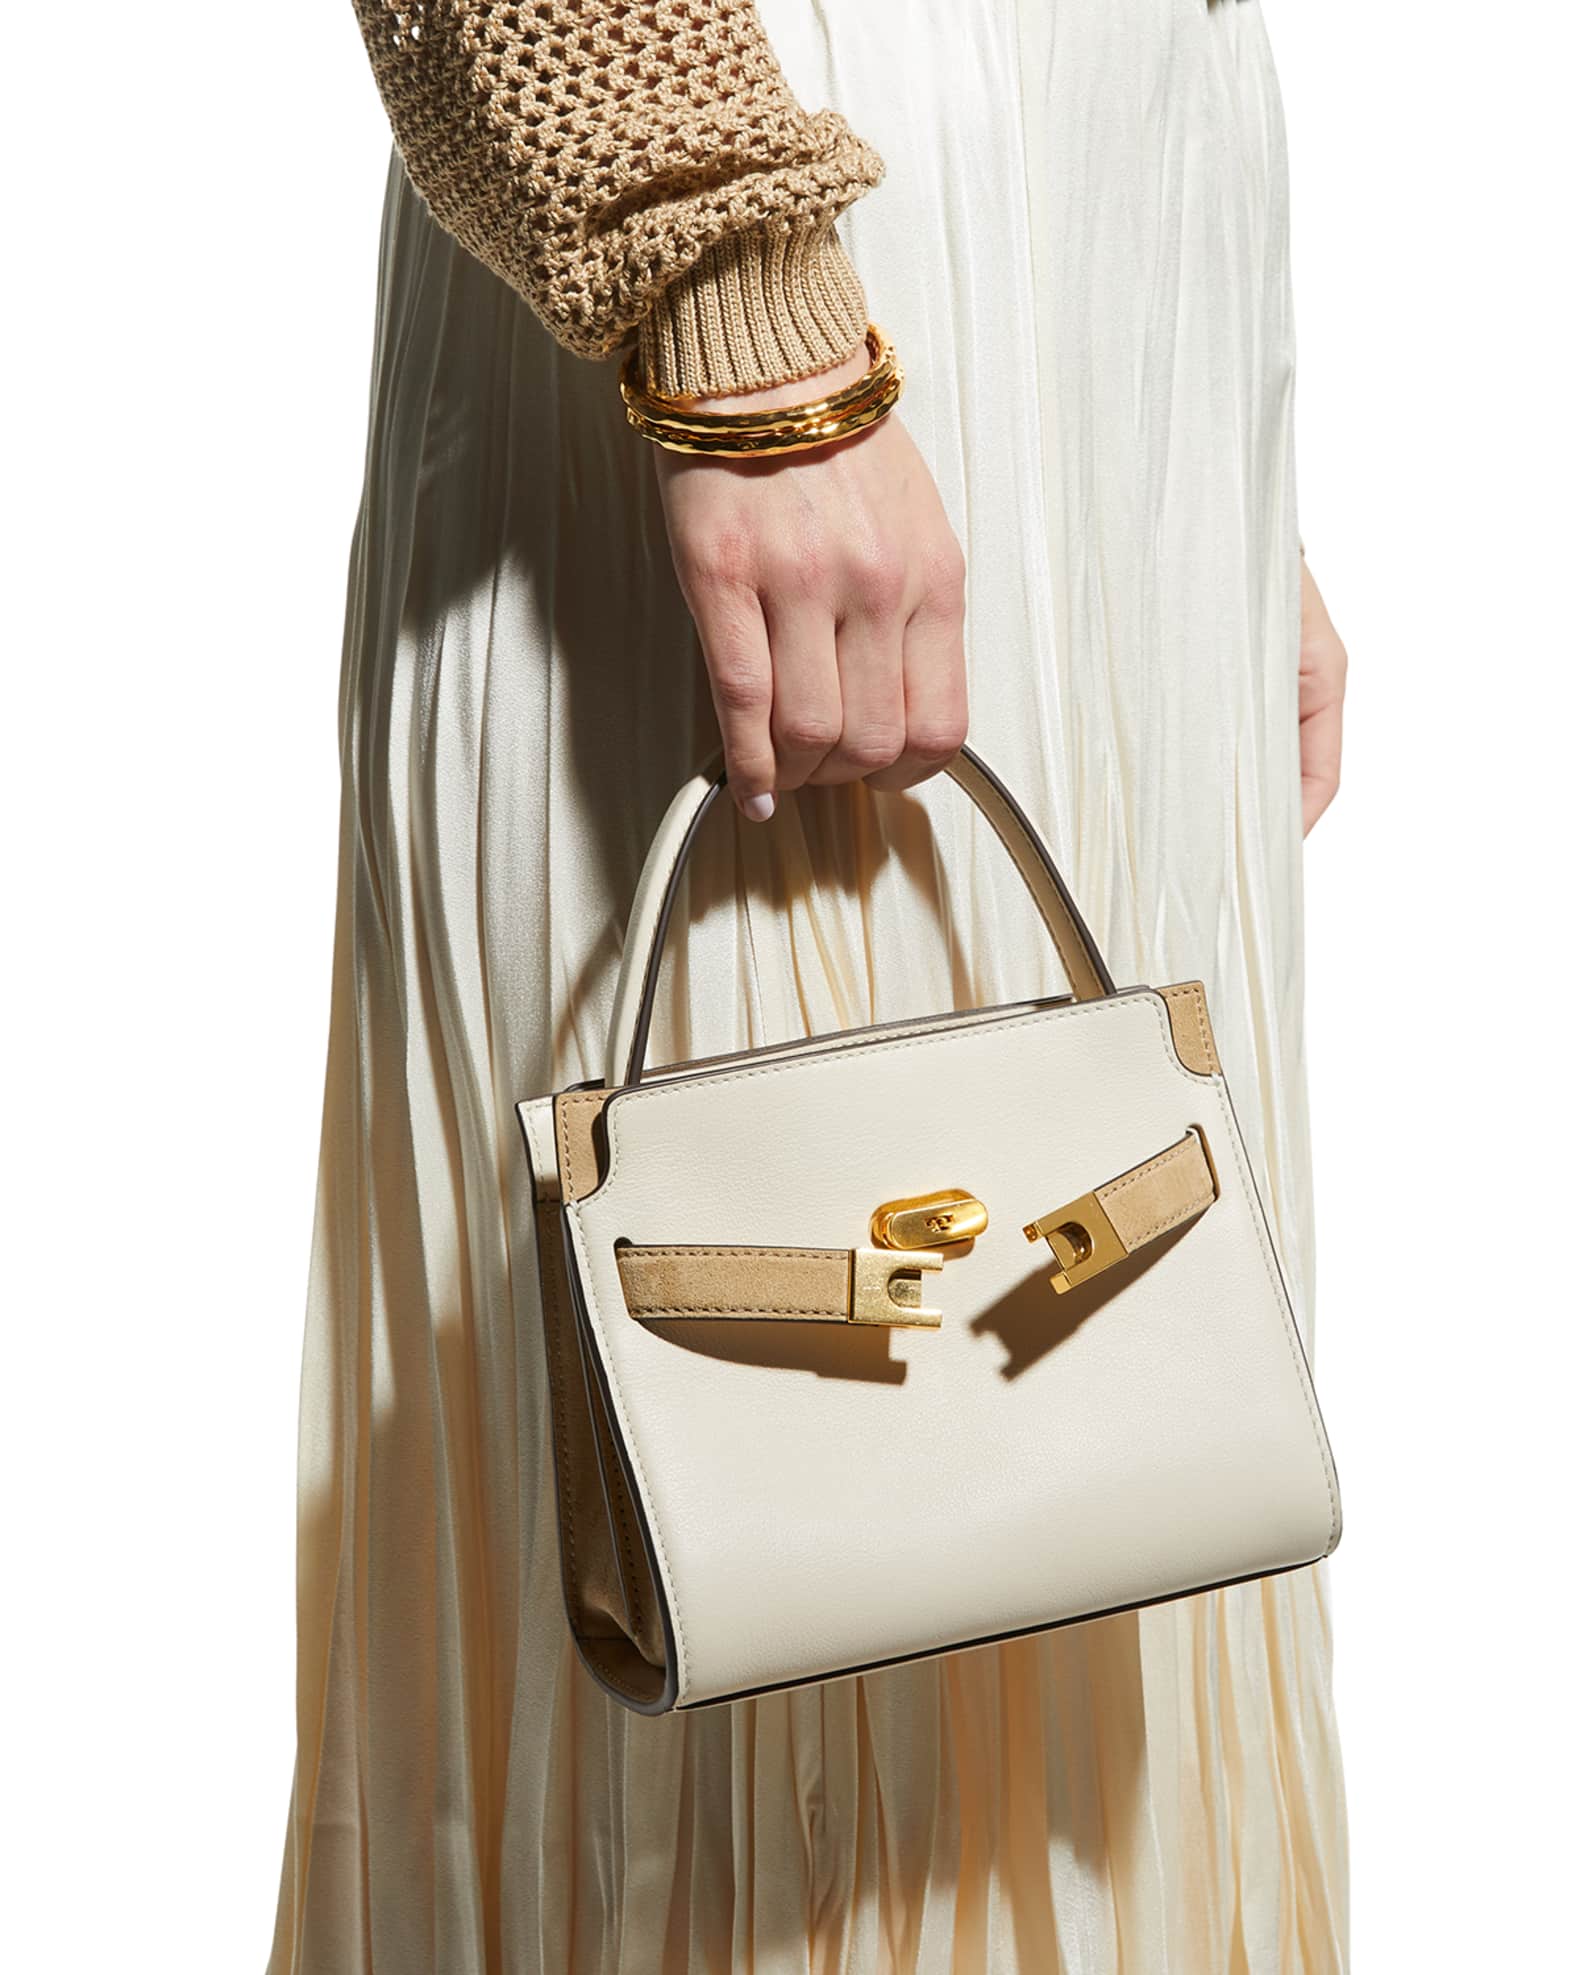 Tory Burch Lee Radziwill Petite Double Bag | Neiman Marcus